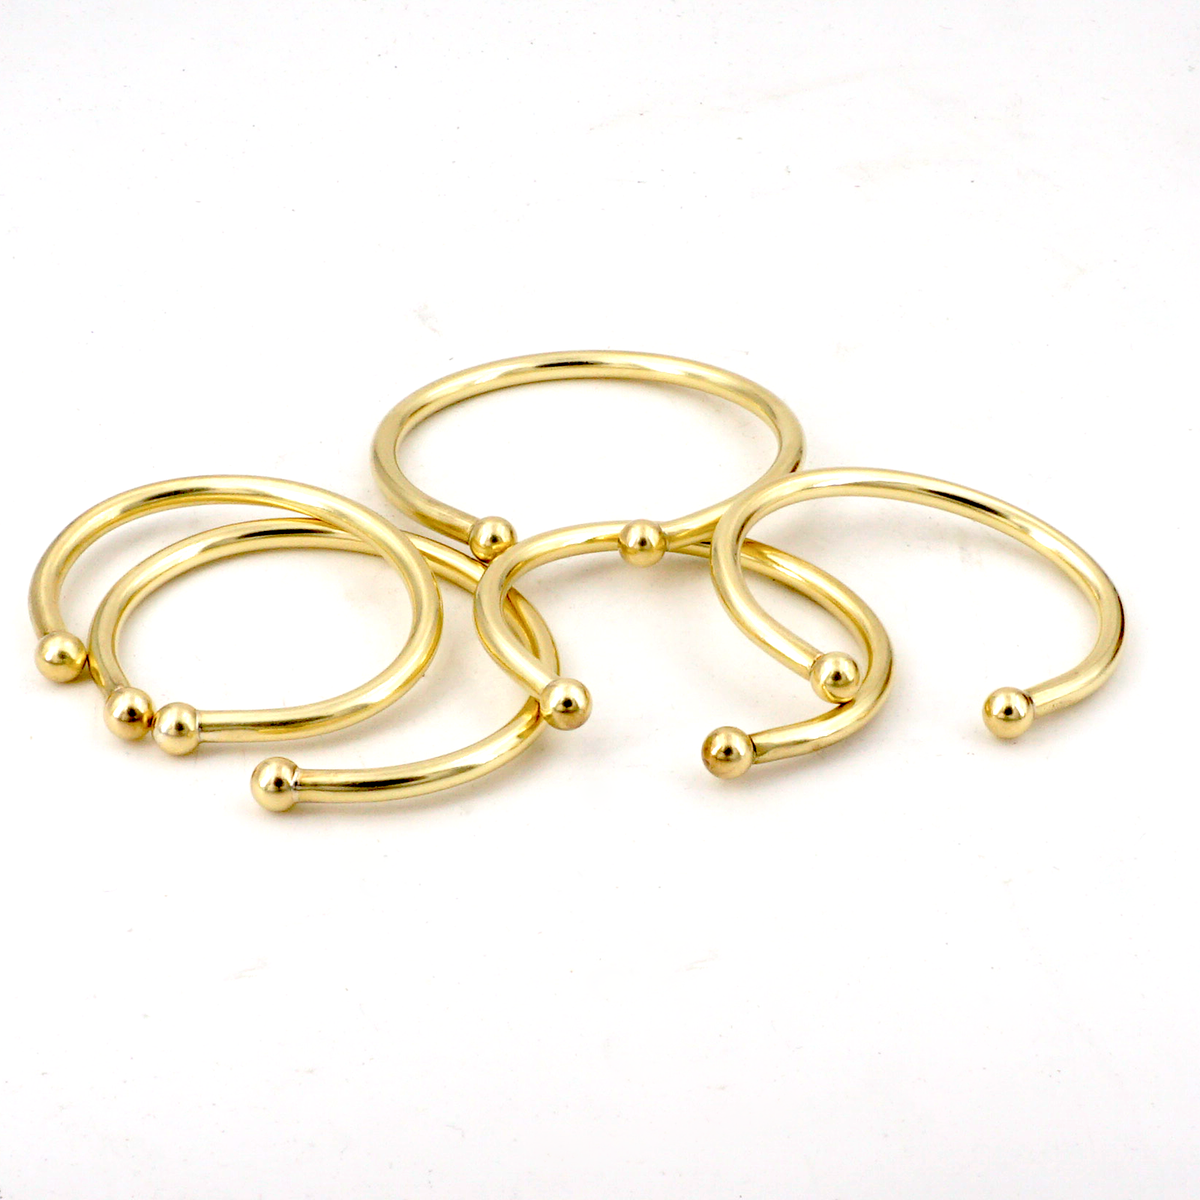 Torque Cuff Bracelet: Stylish Brass or Sterling Silver Jewelry 0198